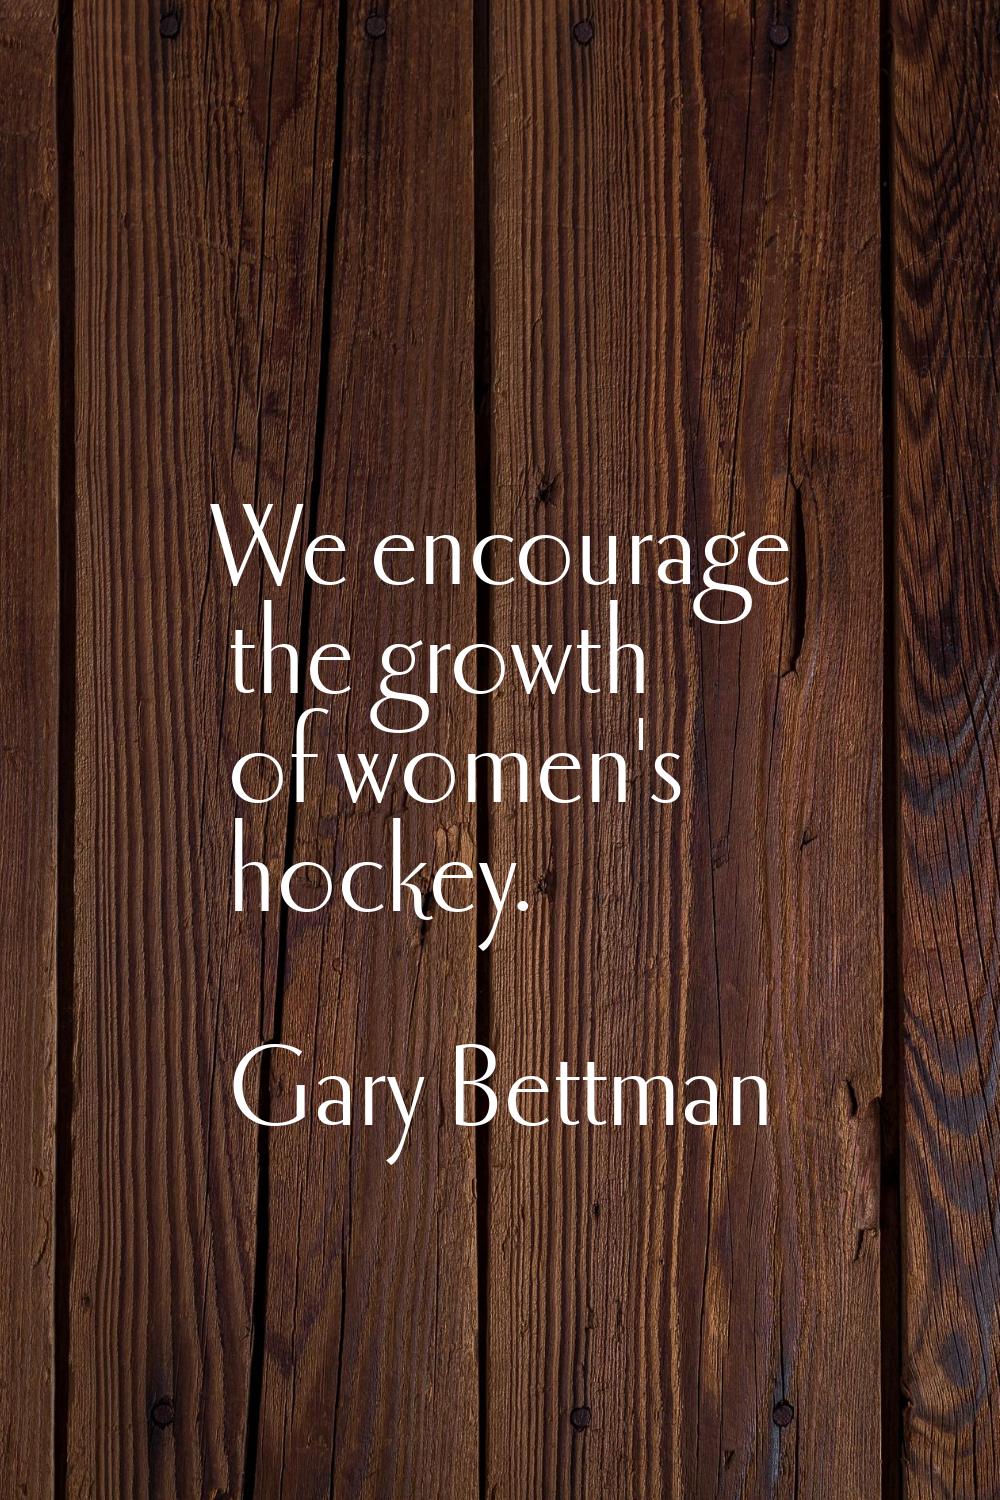 We encourage the growth of women's hockey.